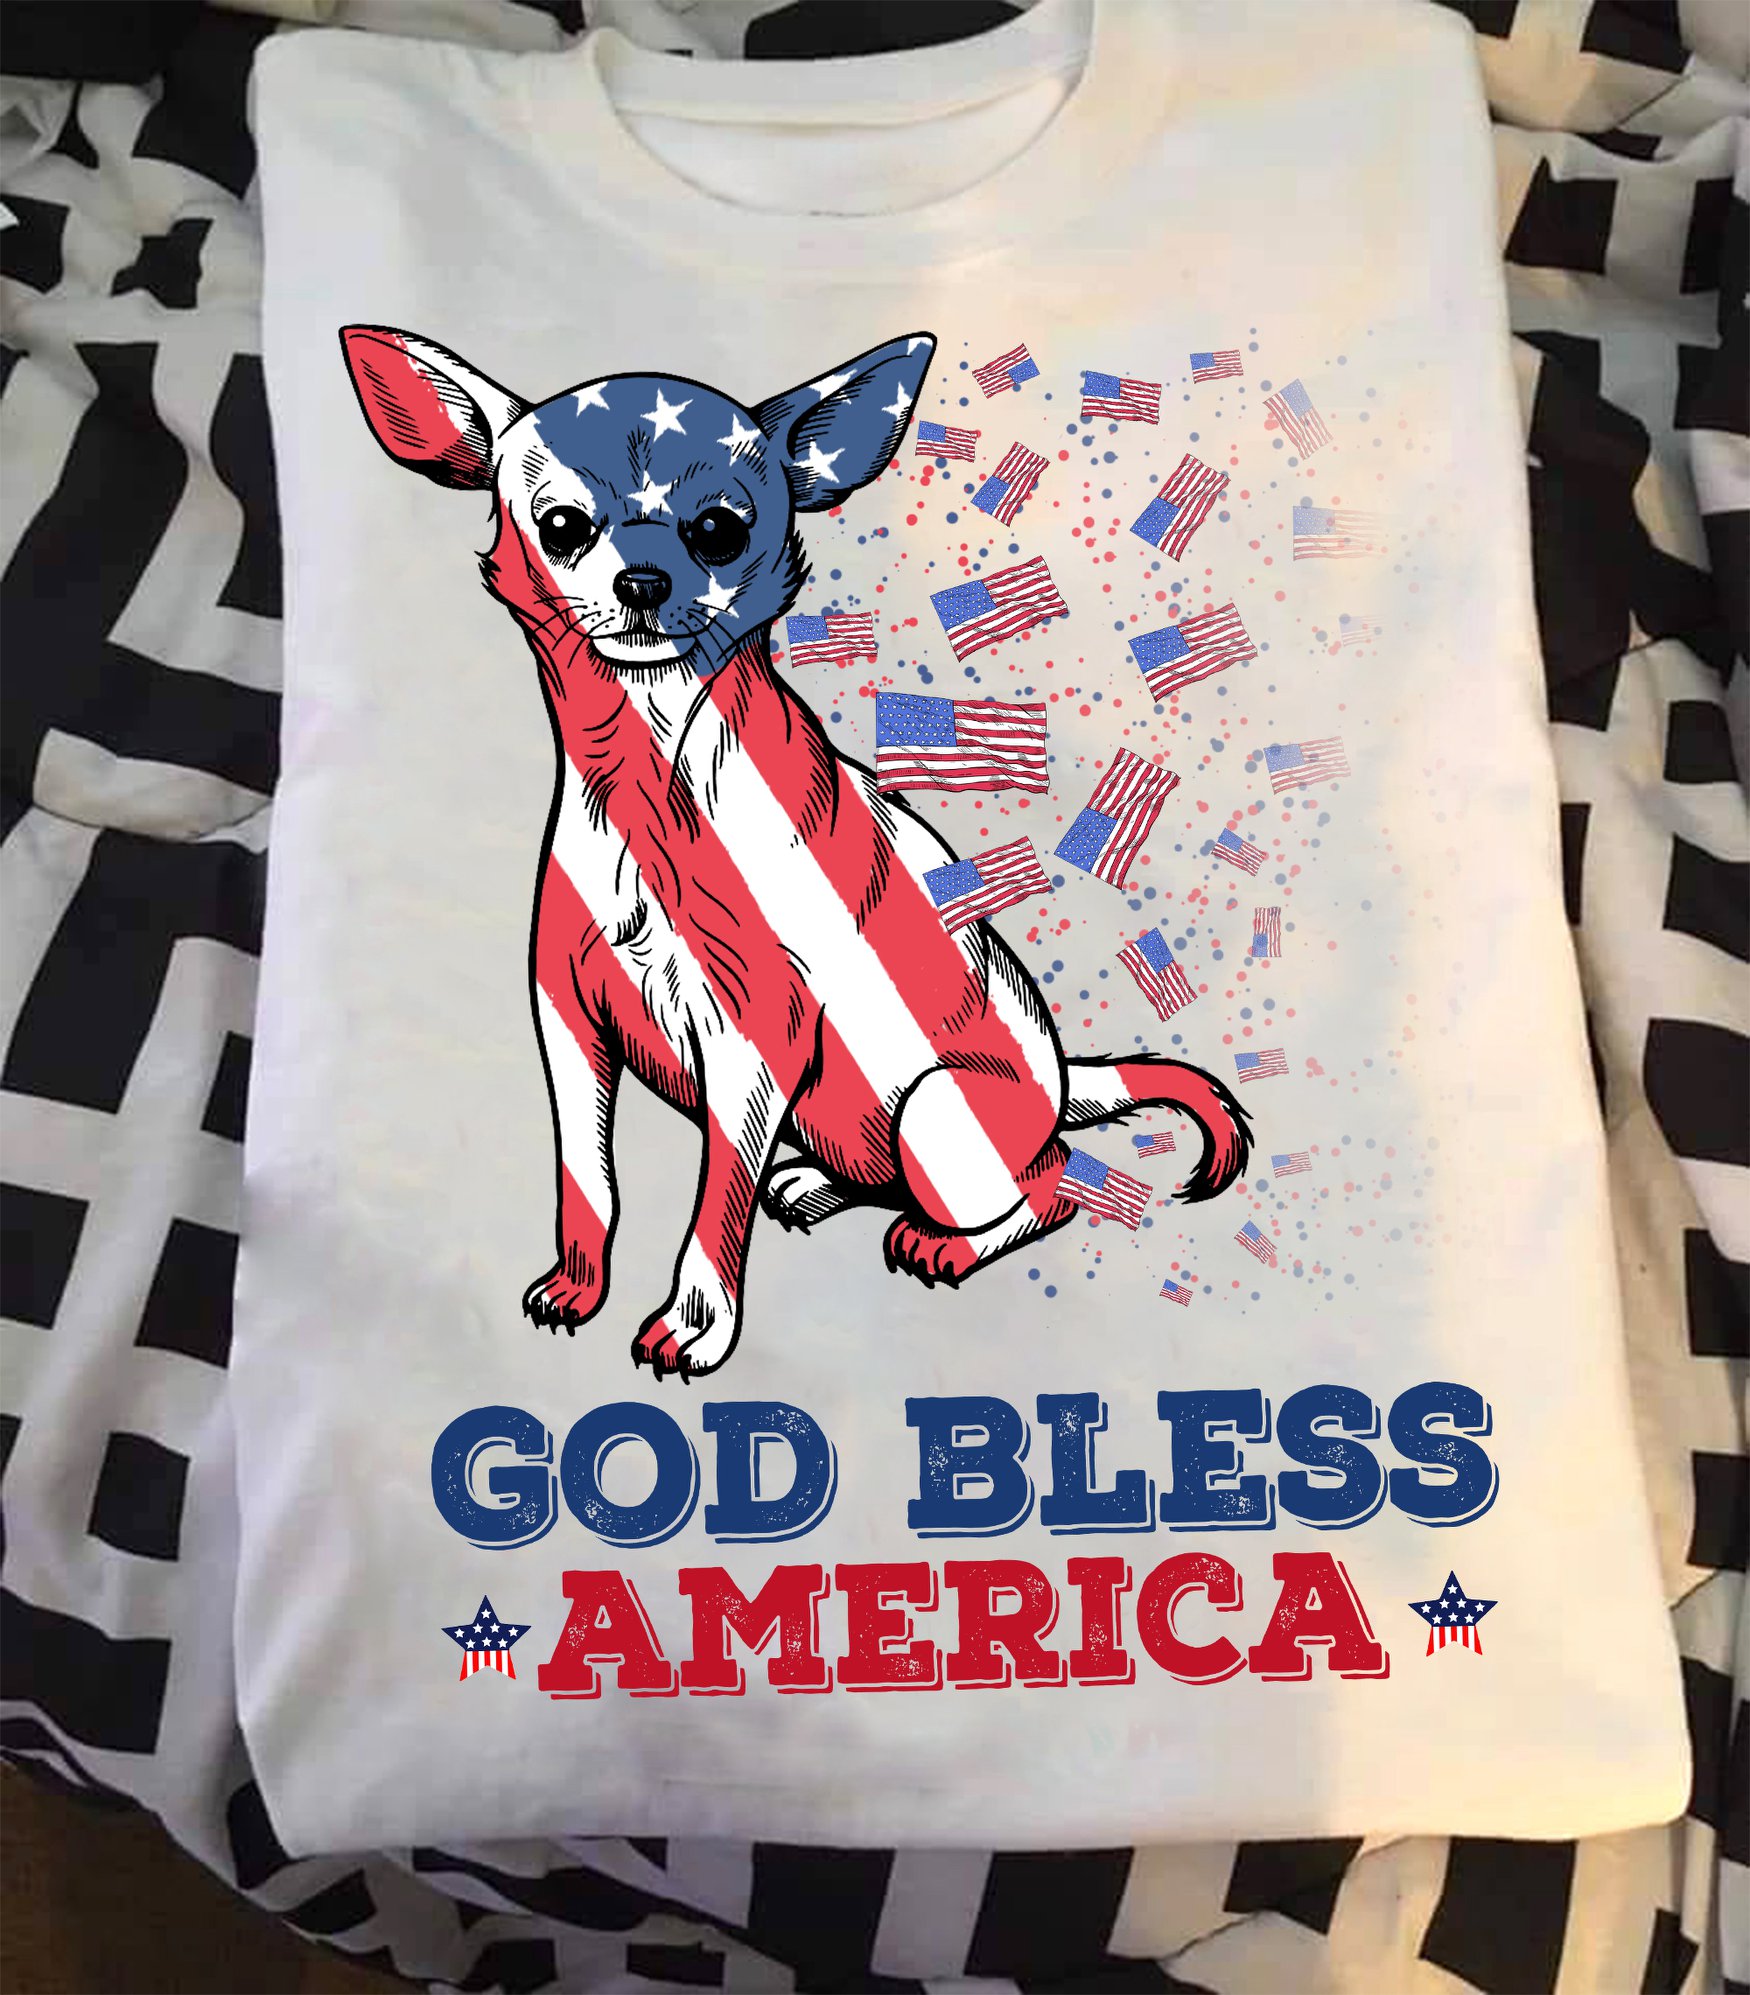 God bless America - America flag and Chihuahua dog